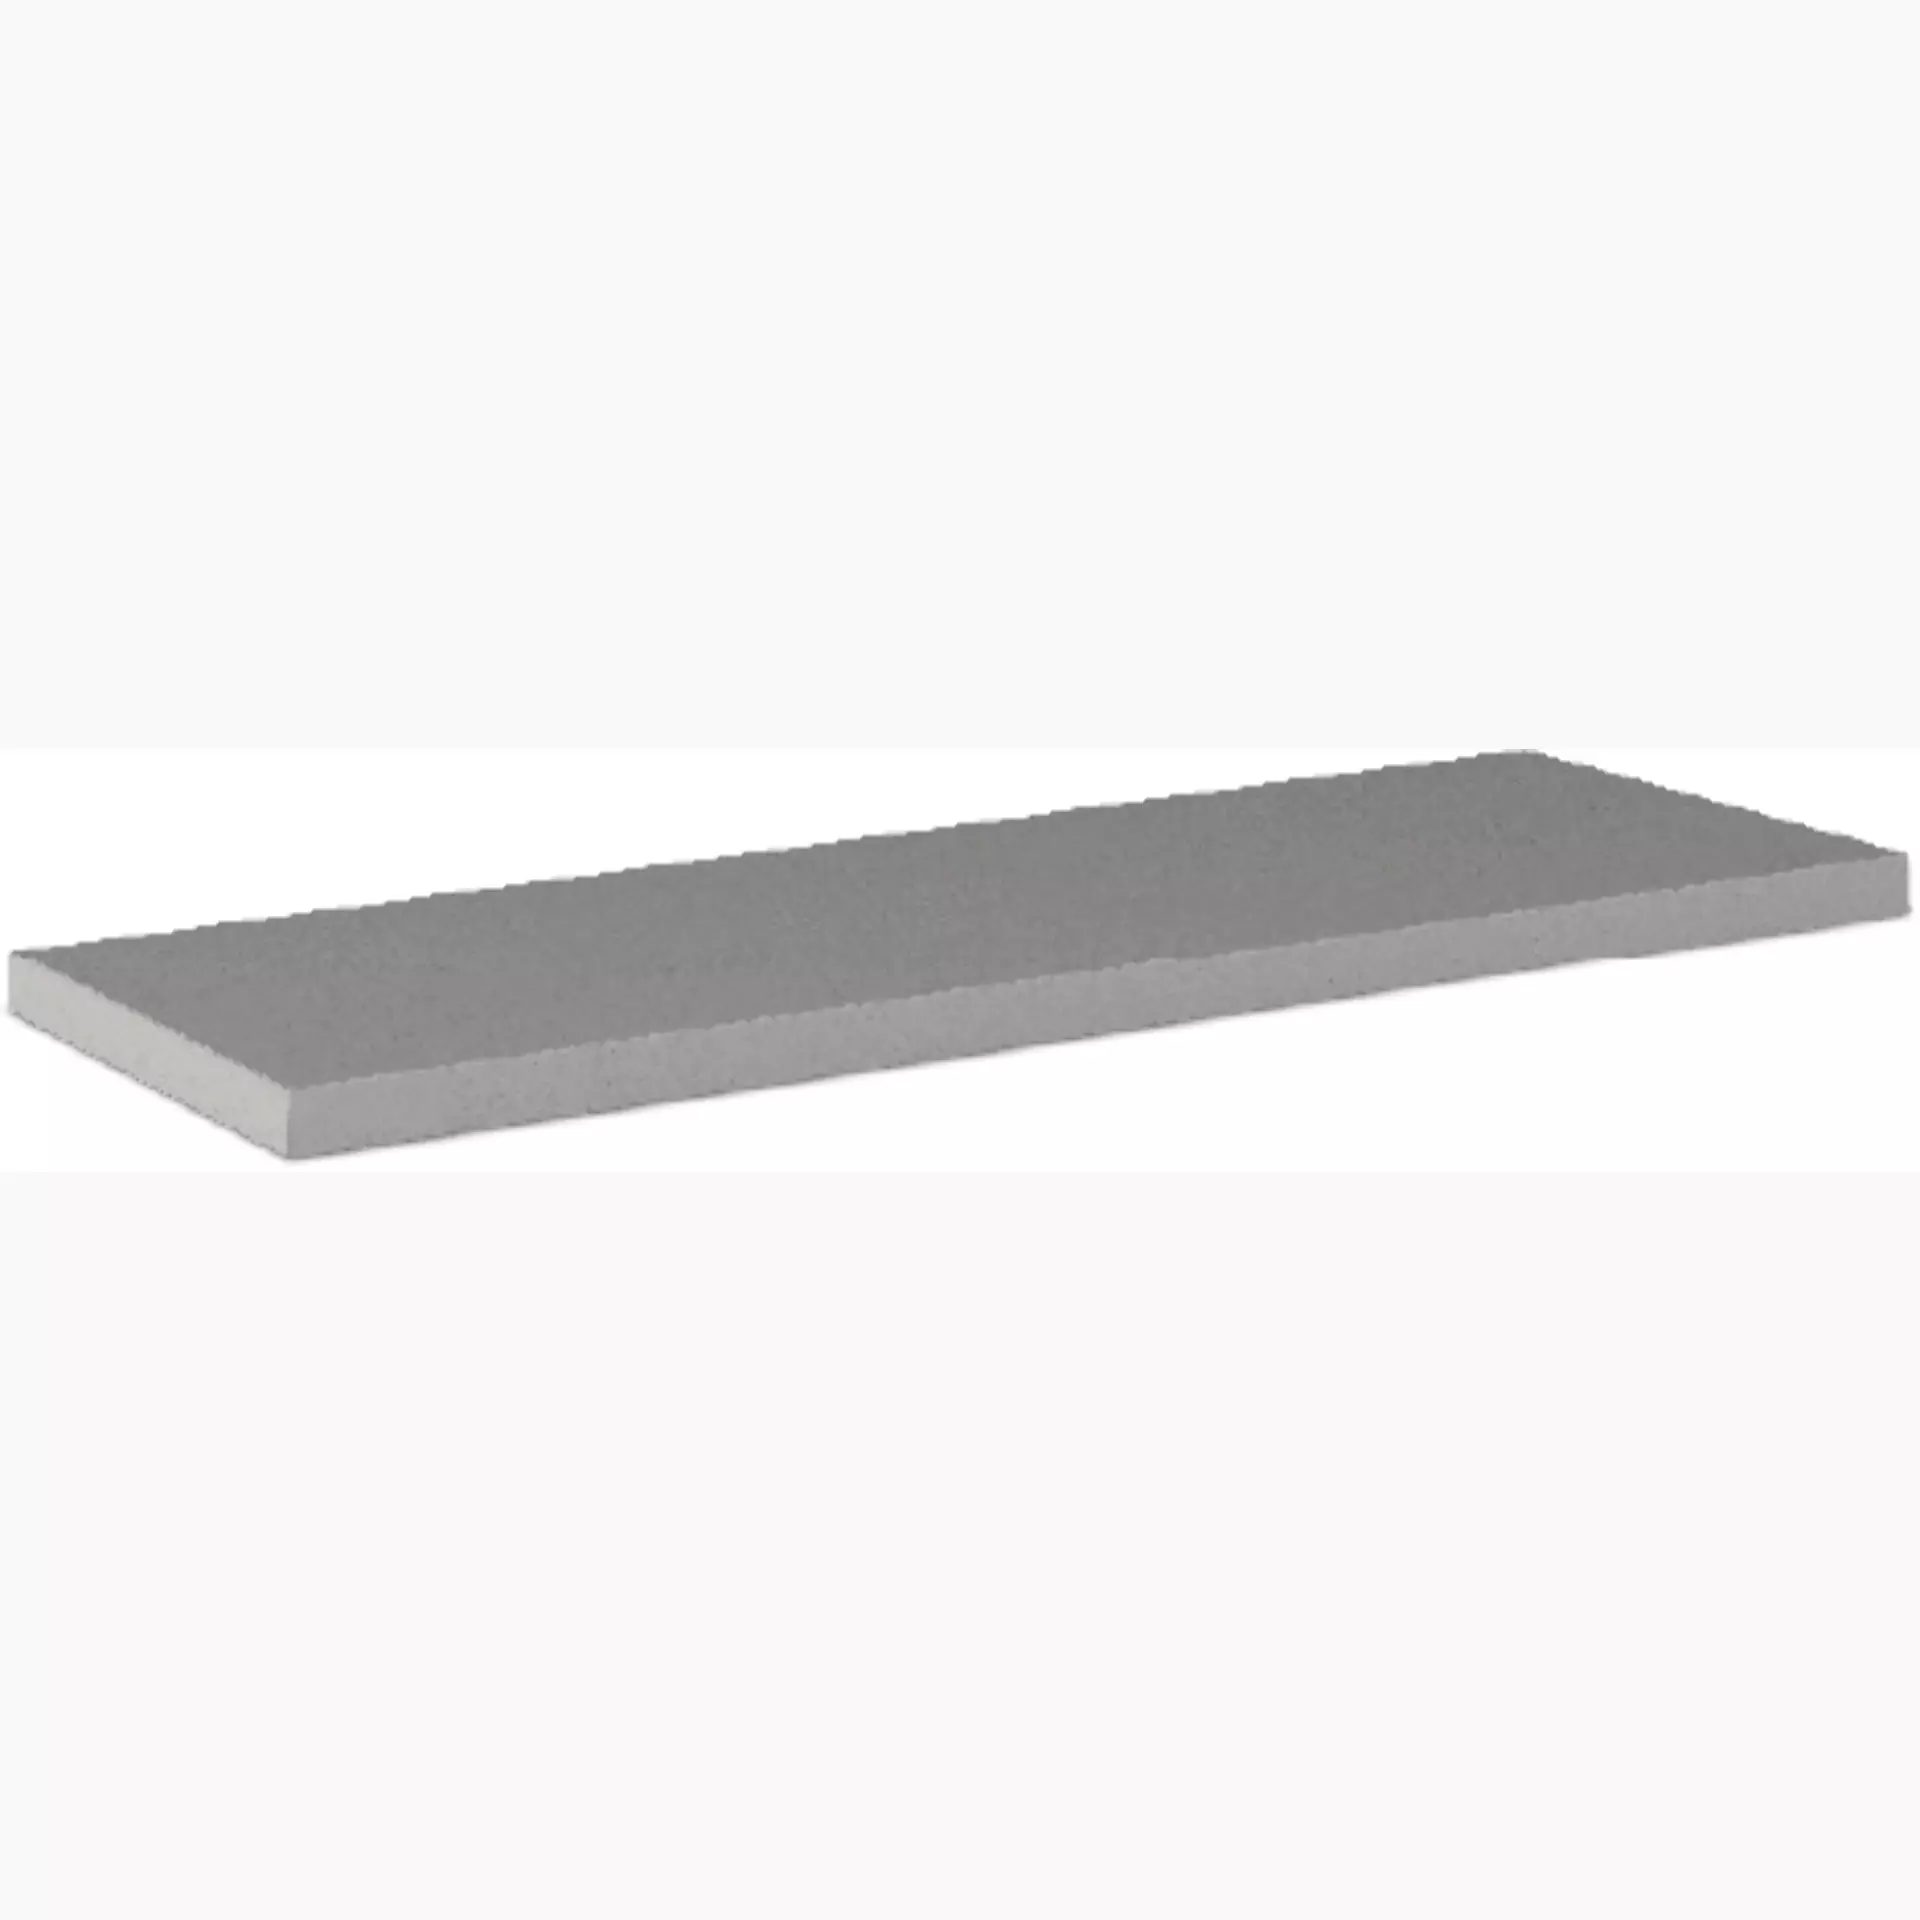 Sichenia Amboise Oro Soft Grip Stair plate Corner Plate Costa Retta Left 0192865 33x120cm rectified 10mm